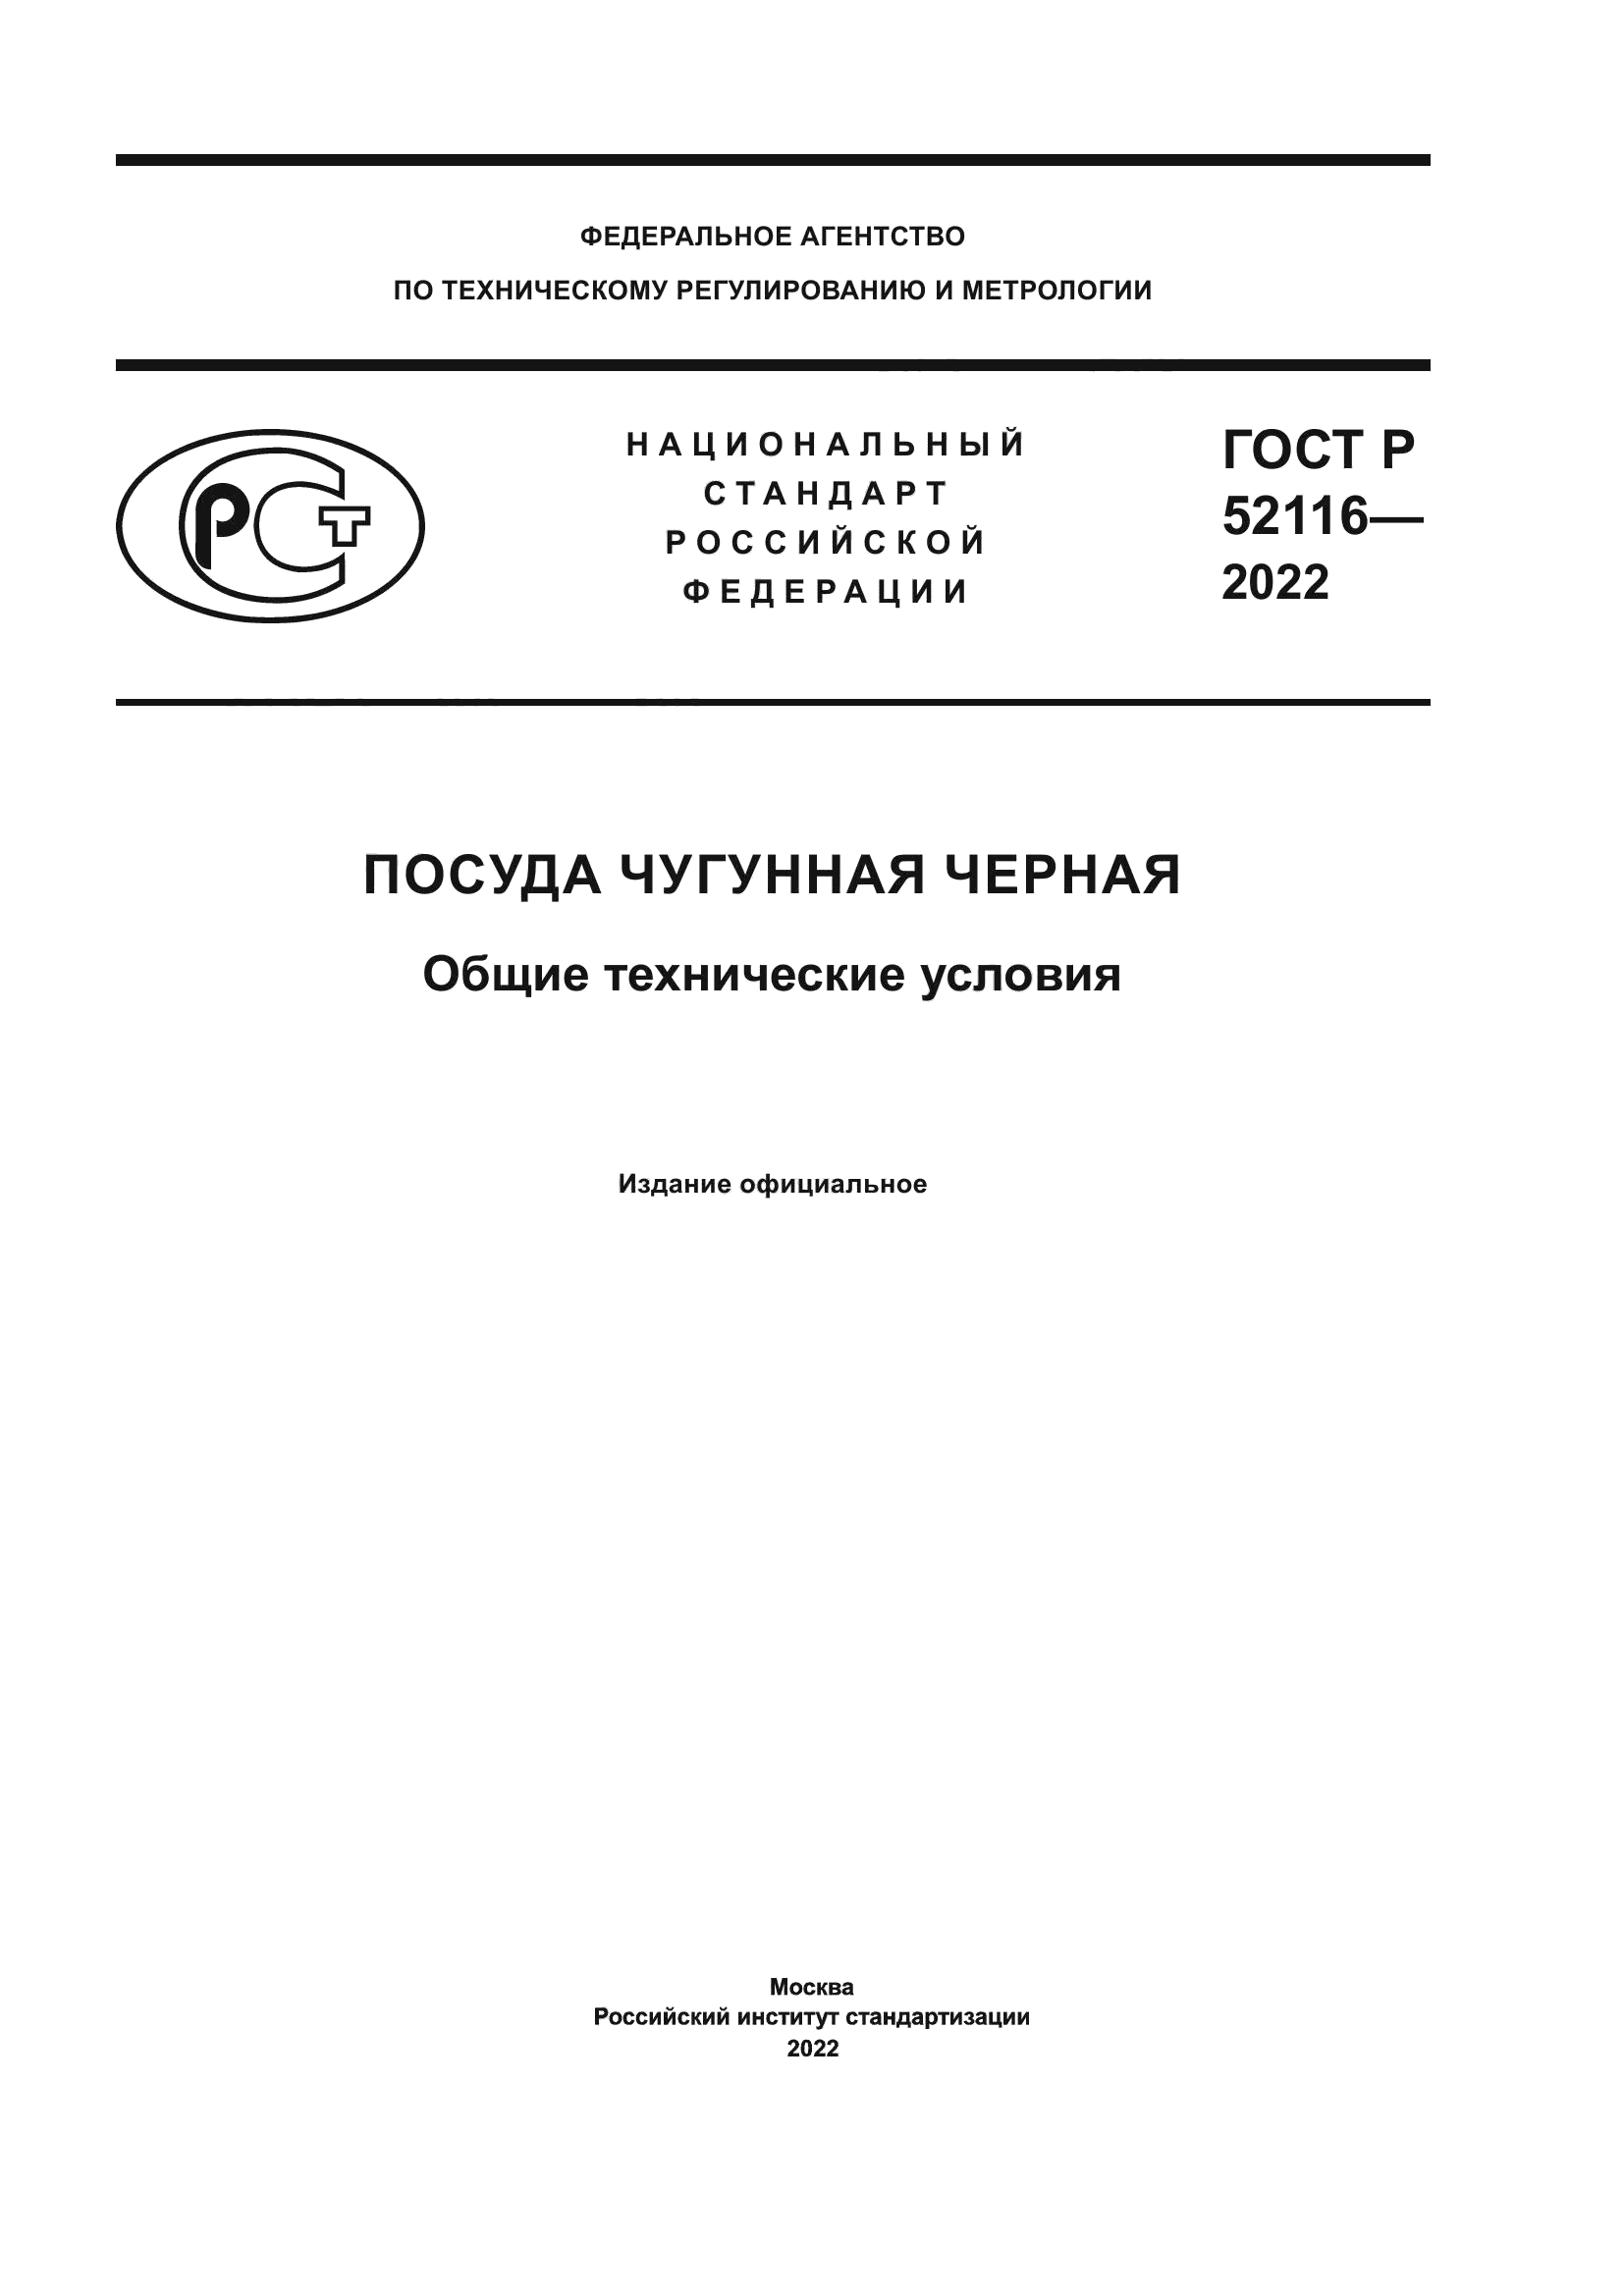 ГОСТ Р 52116-2022